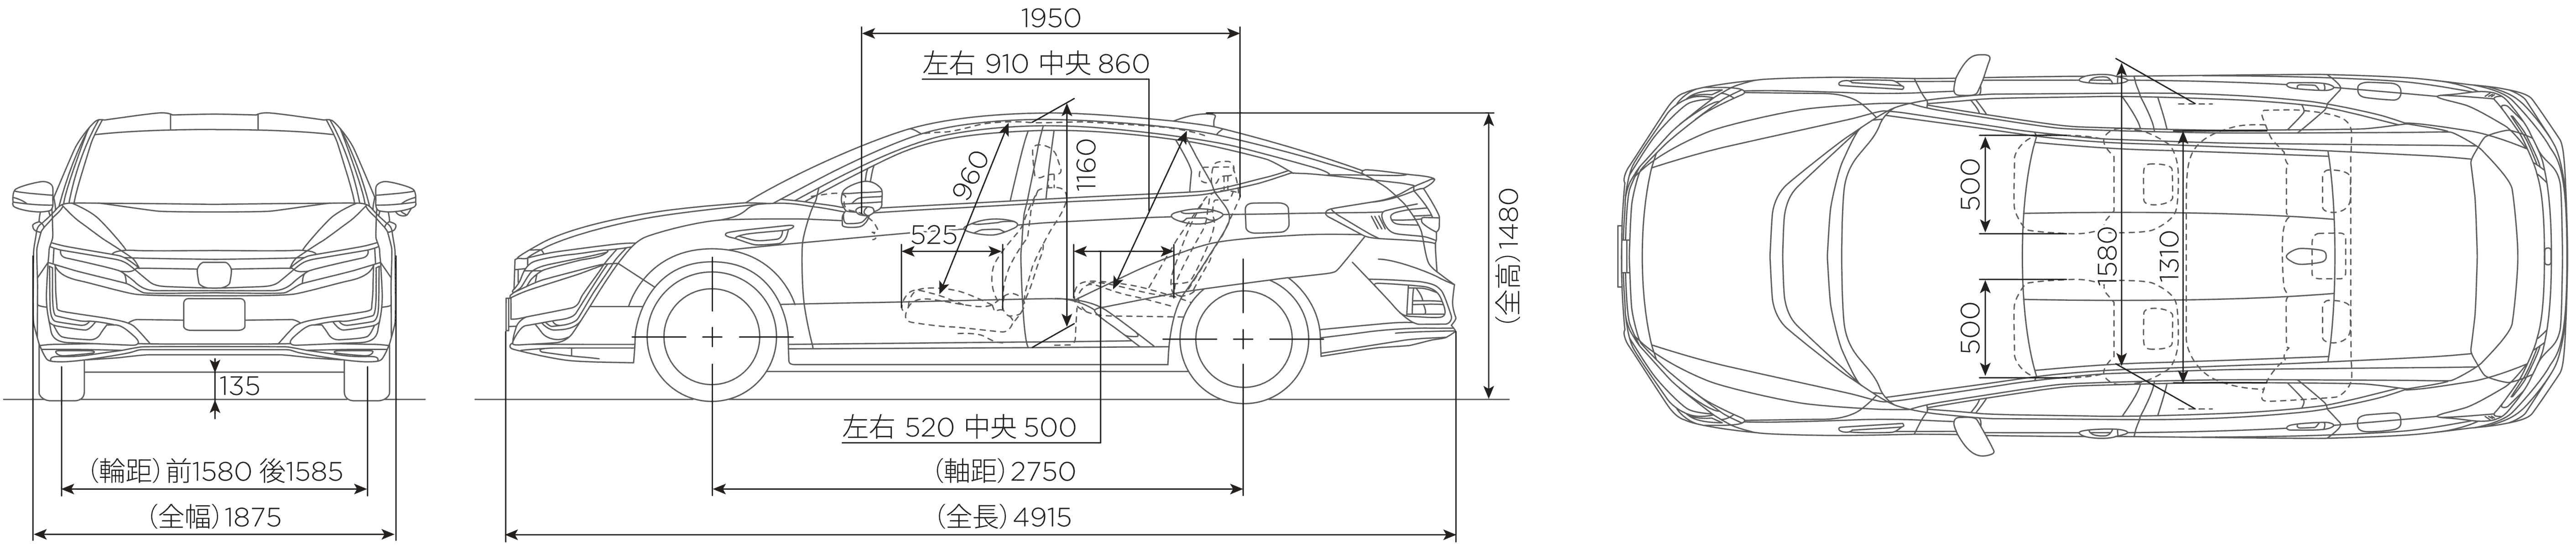 Honda Clarity Fuel Cell blueprint